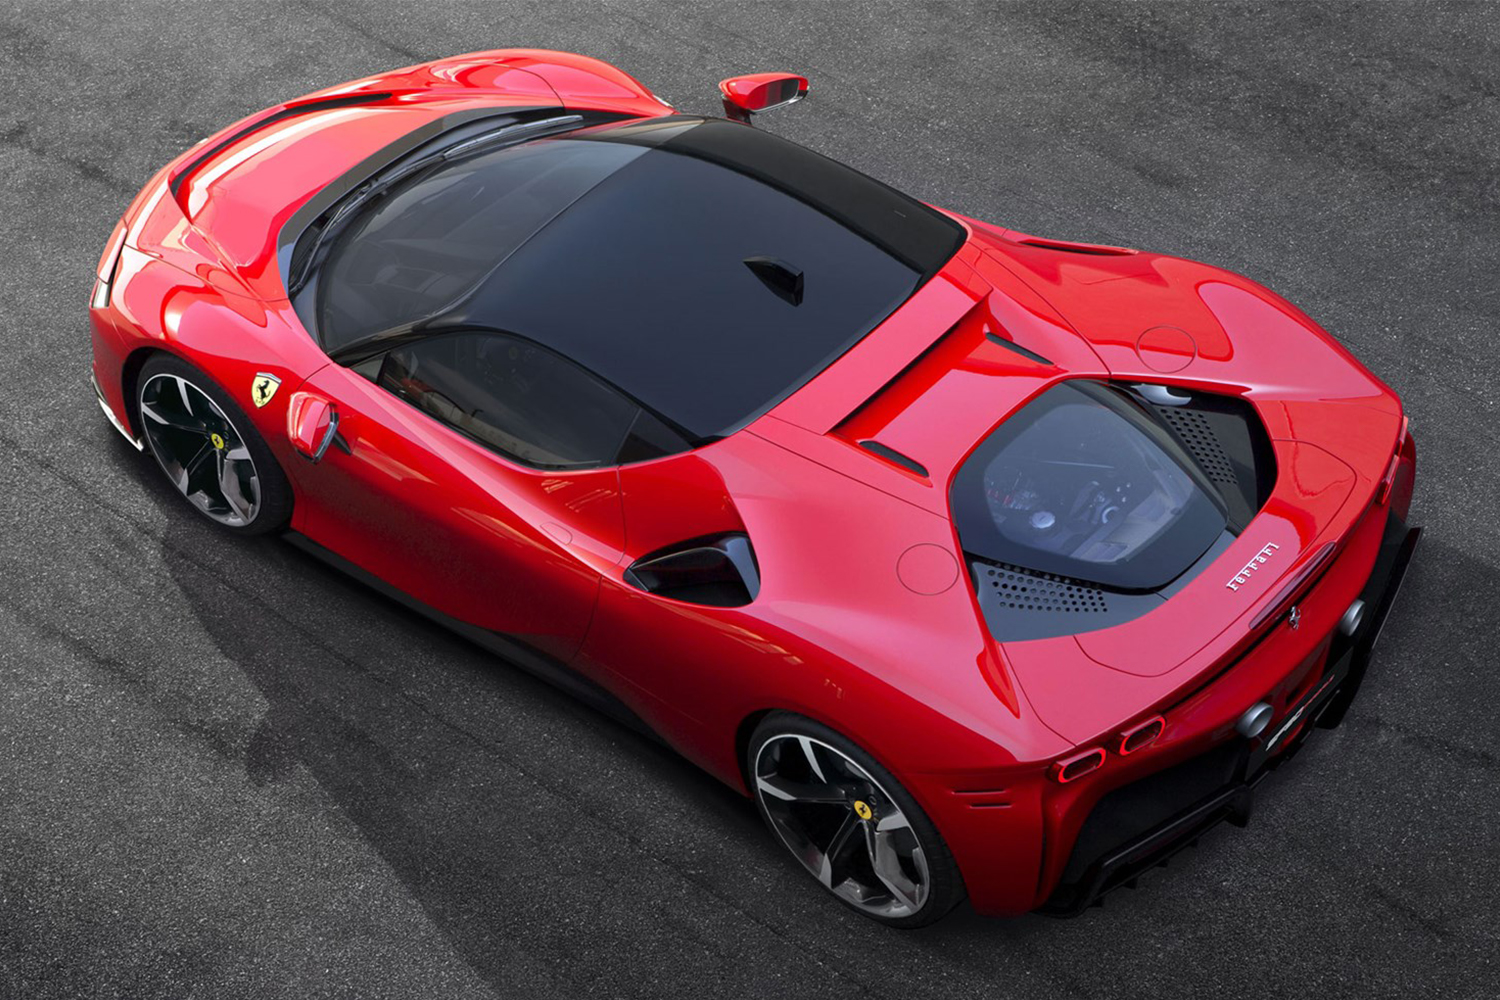 Ferrari's New SF90 Stradale Sports Car